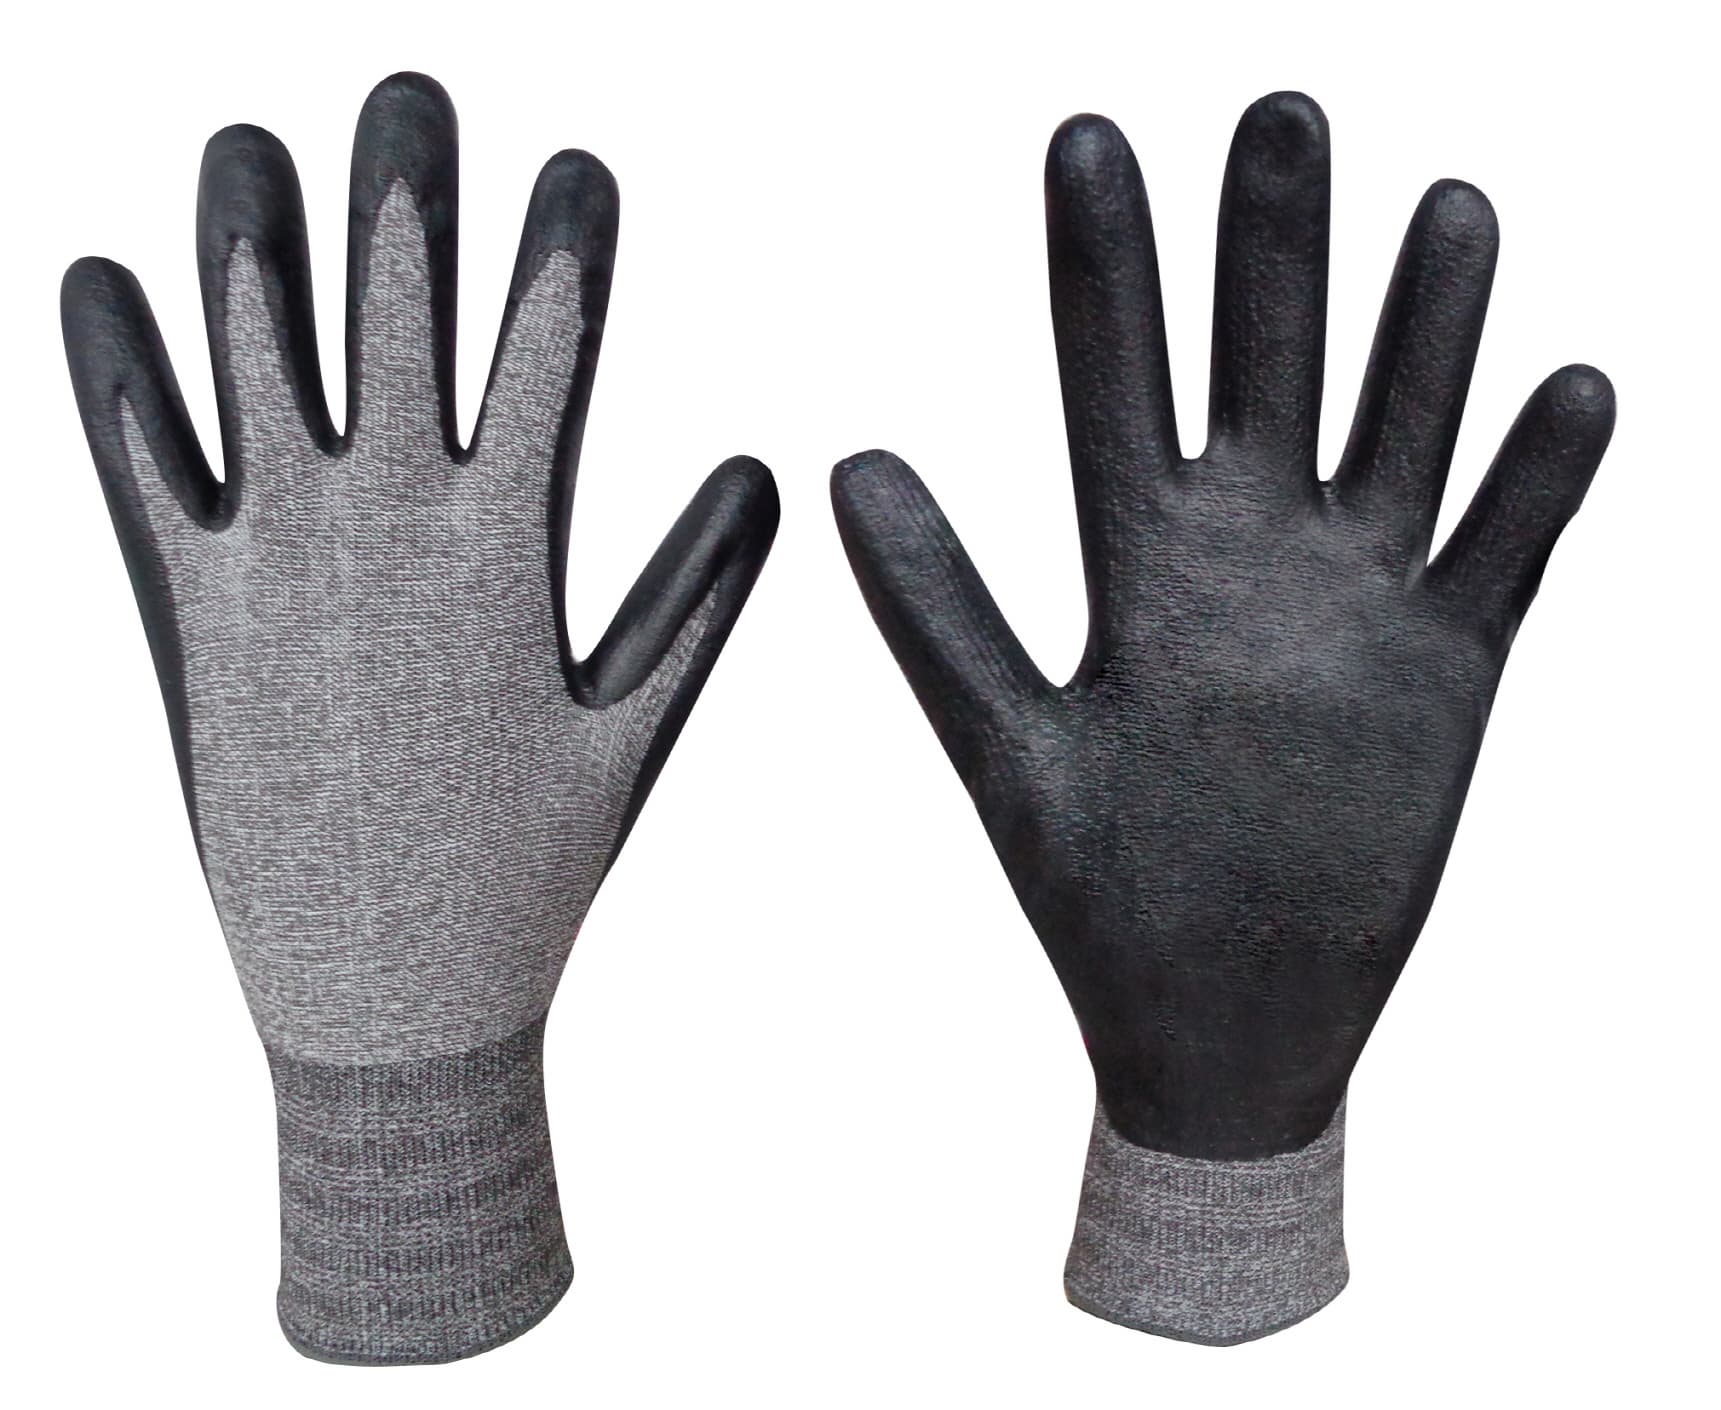 Natural Grip100 Bamboo charcoal_NBR Foam coating gloves